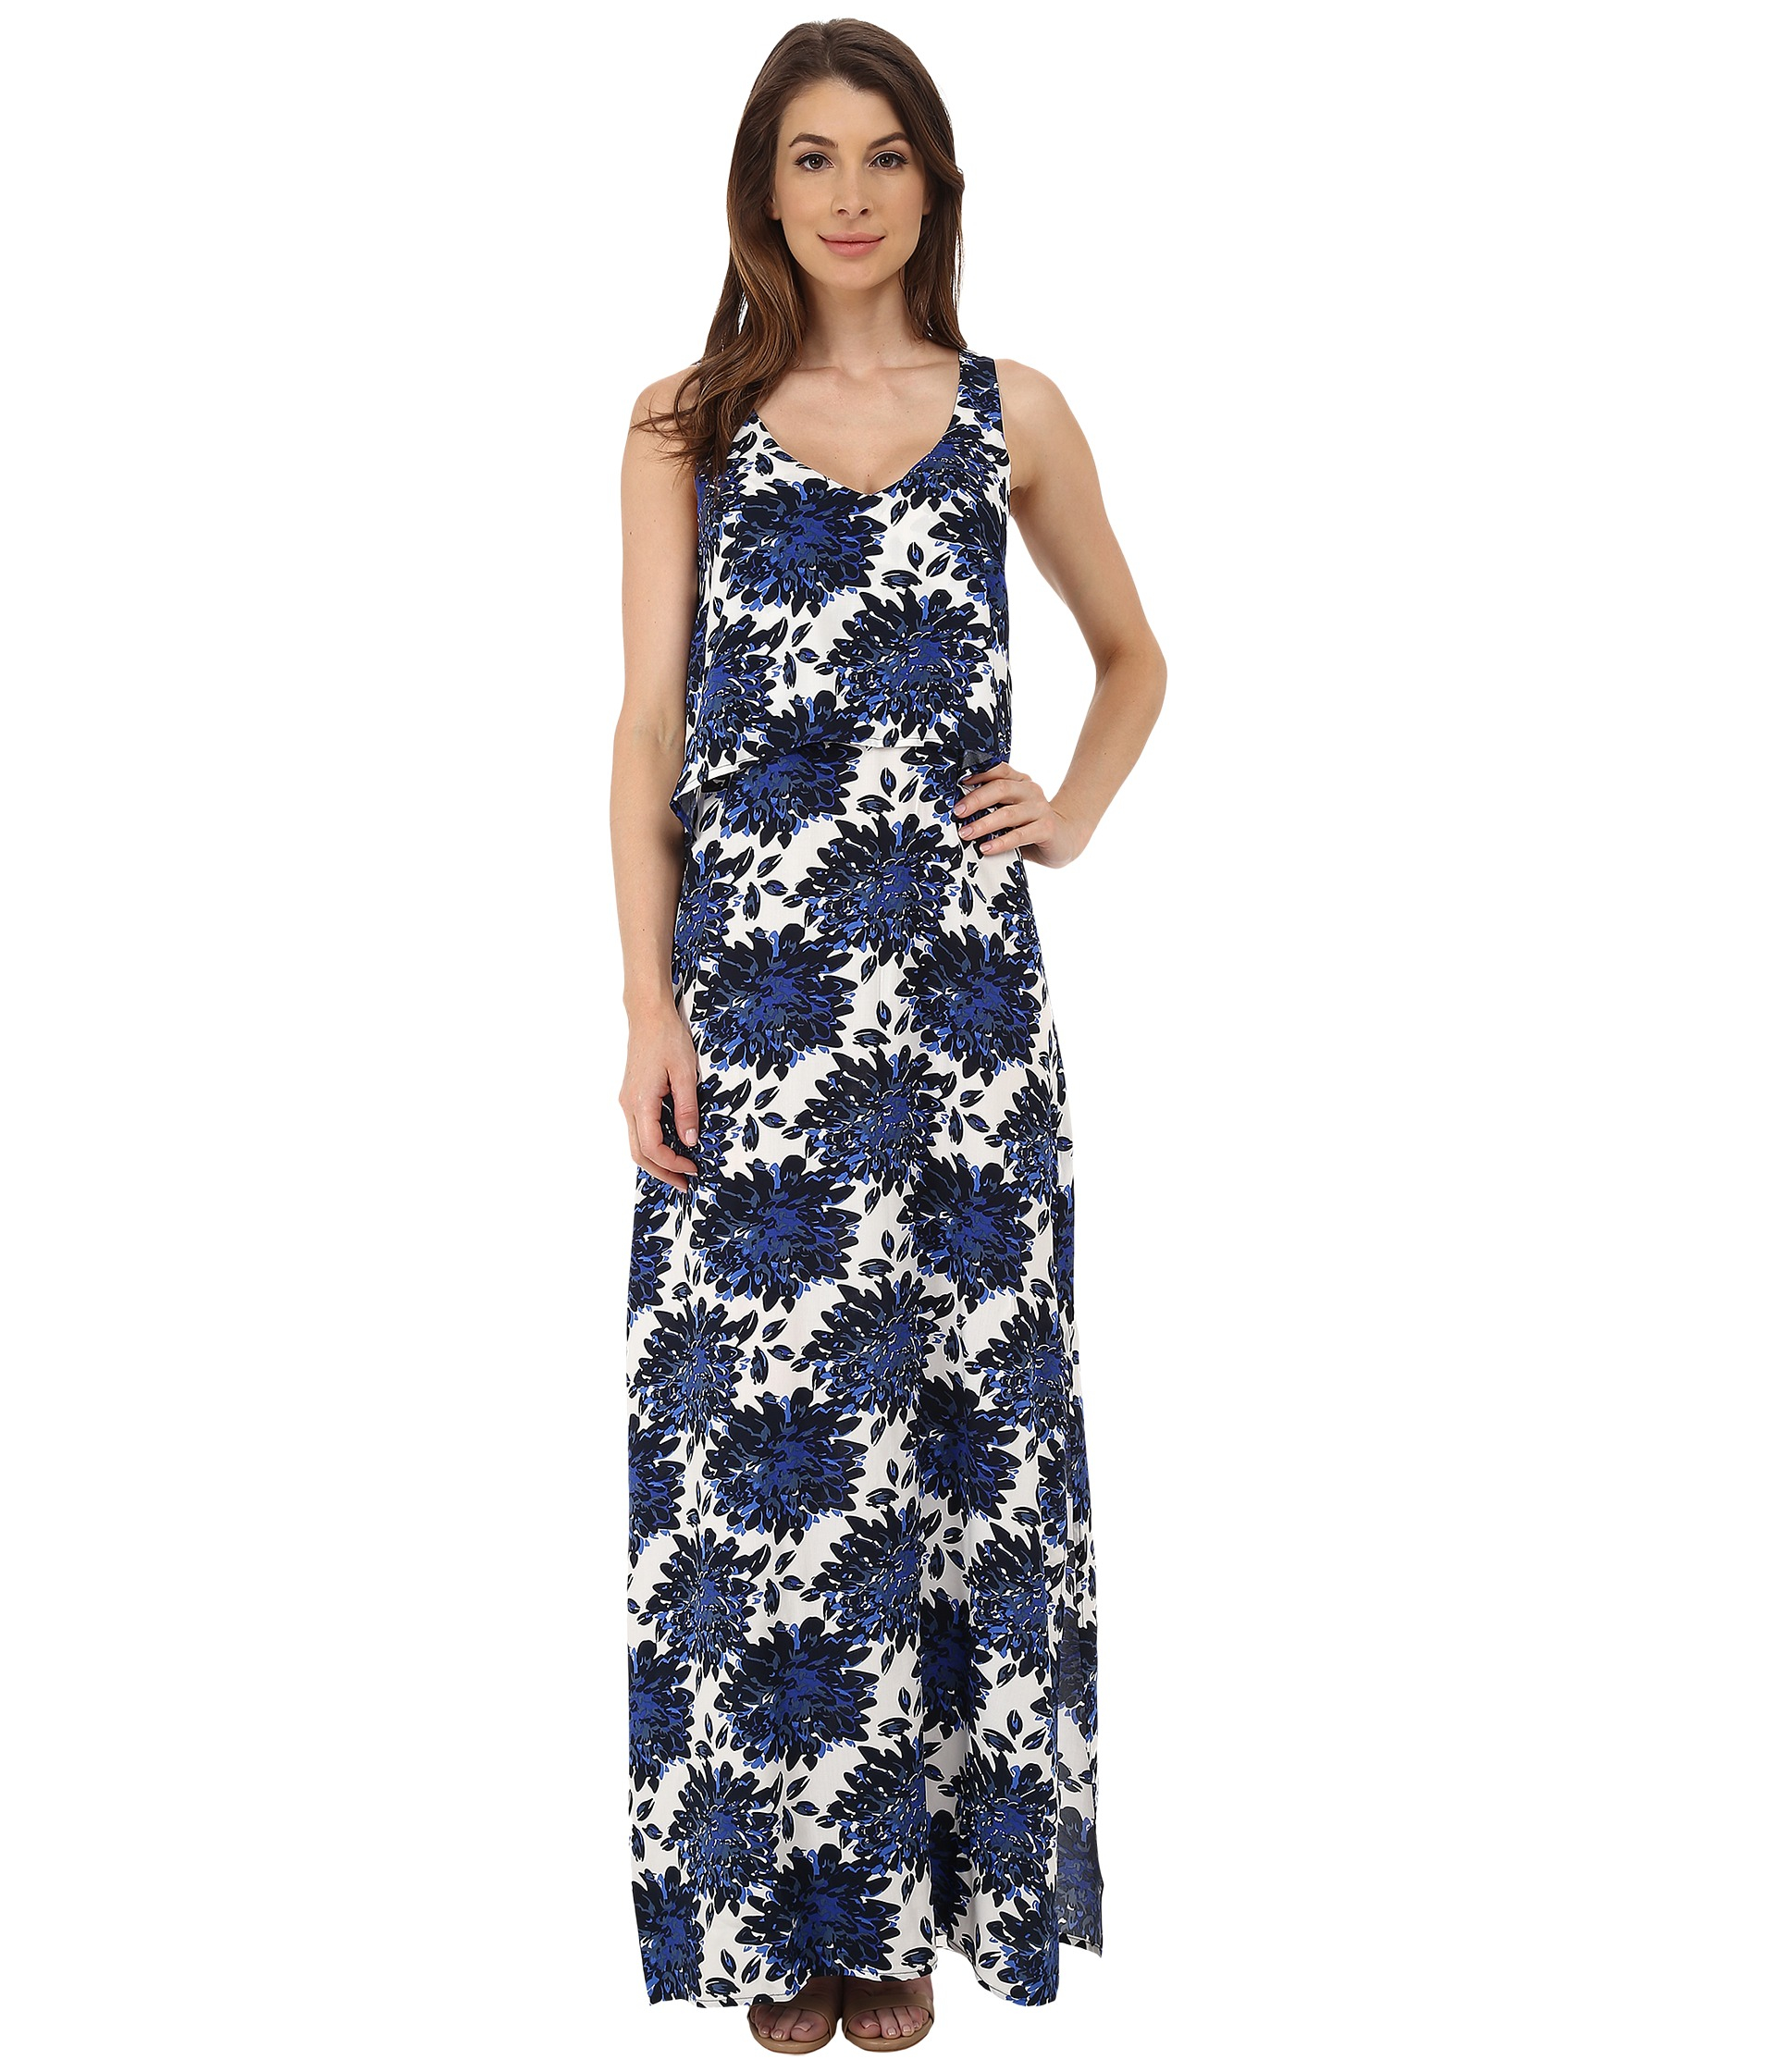 Lyst - Splendid Mediterranean Blossom Maxi Dress in Blue